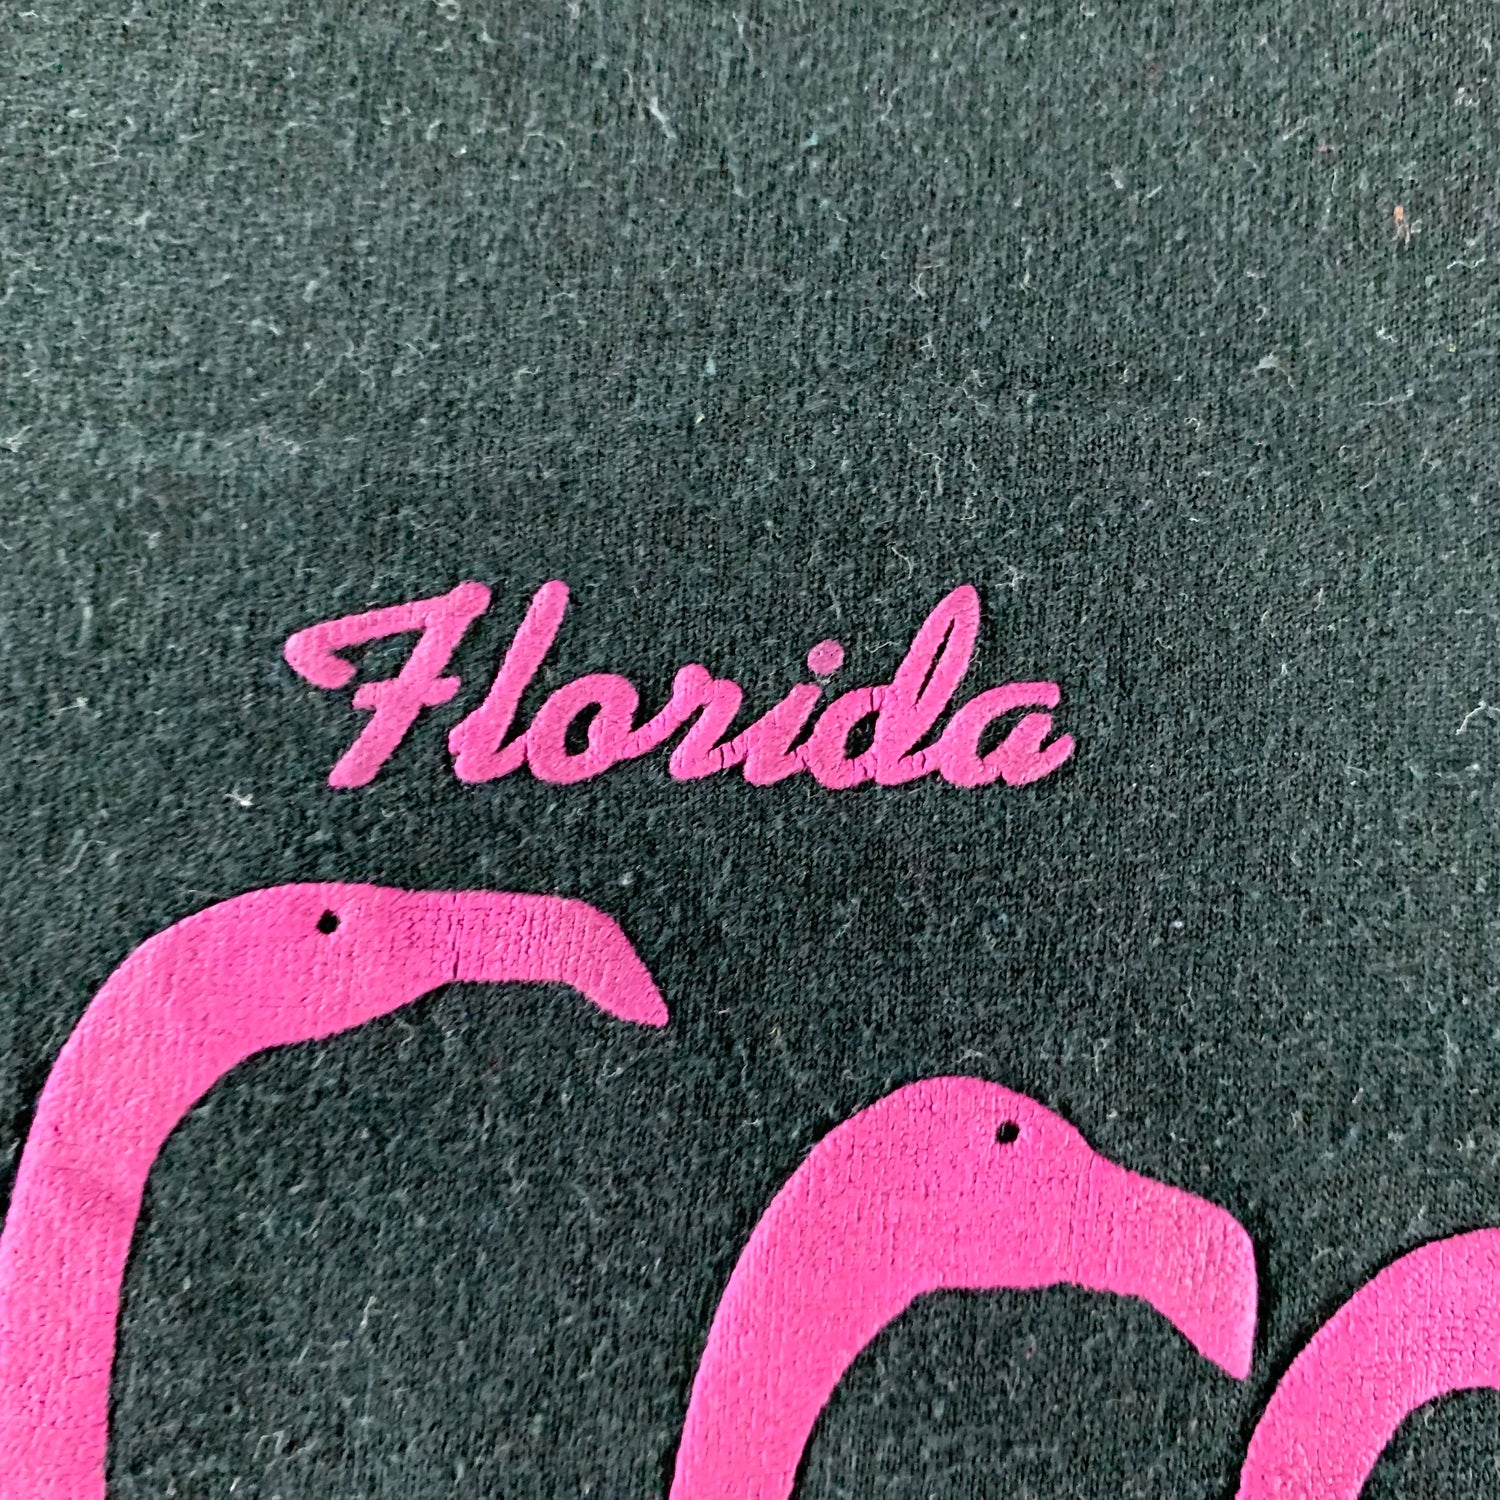 Vintage 1980s Flamingo T-shirt size Large